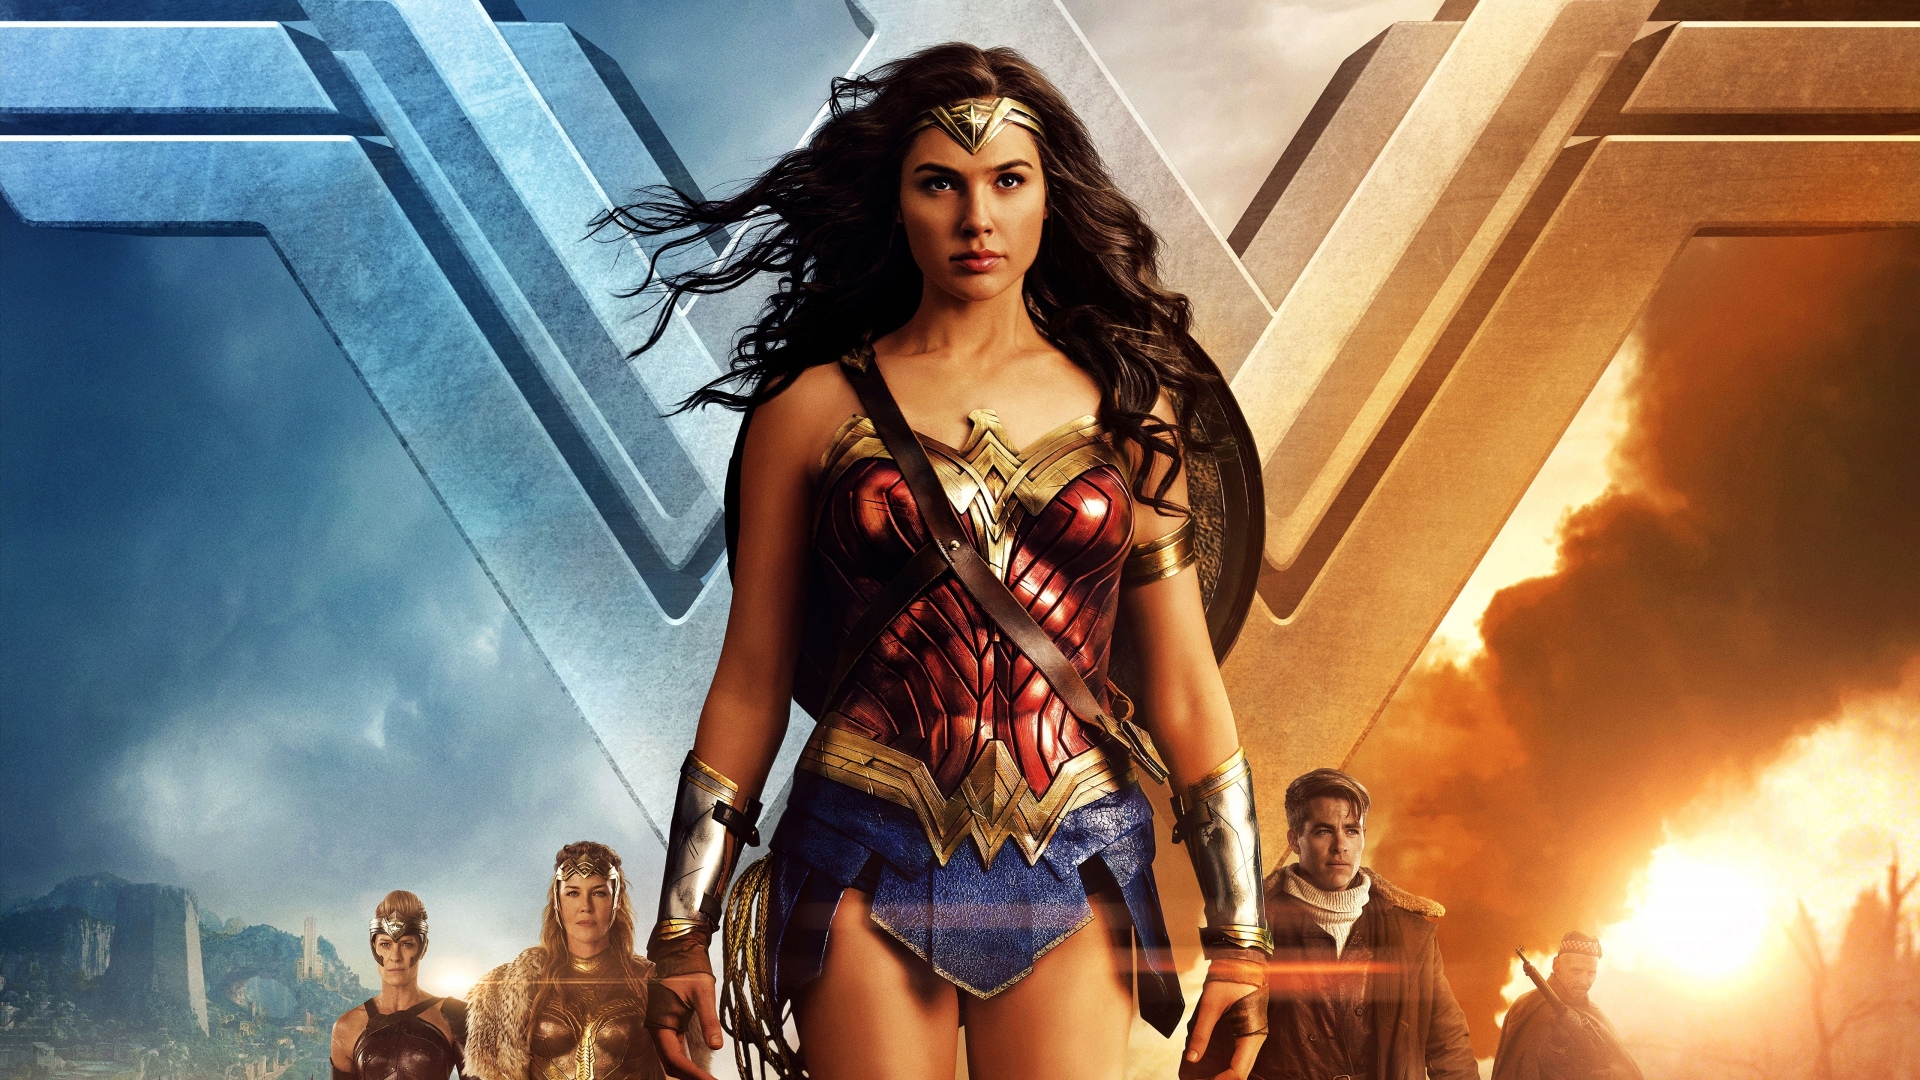 Wonder Woman Gal Gadot 2017 for 1920 x 1080 HDTV 1080p resolution